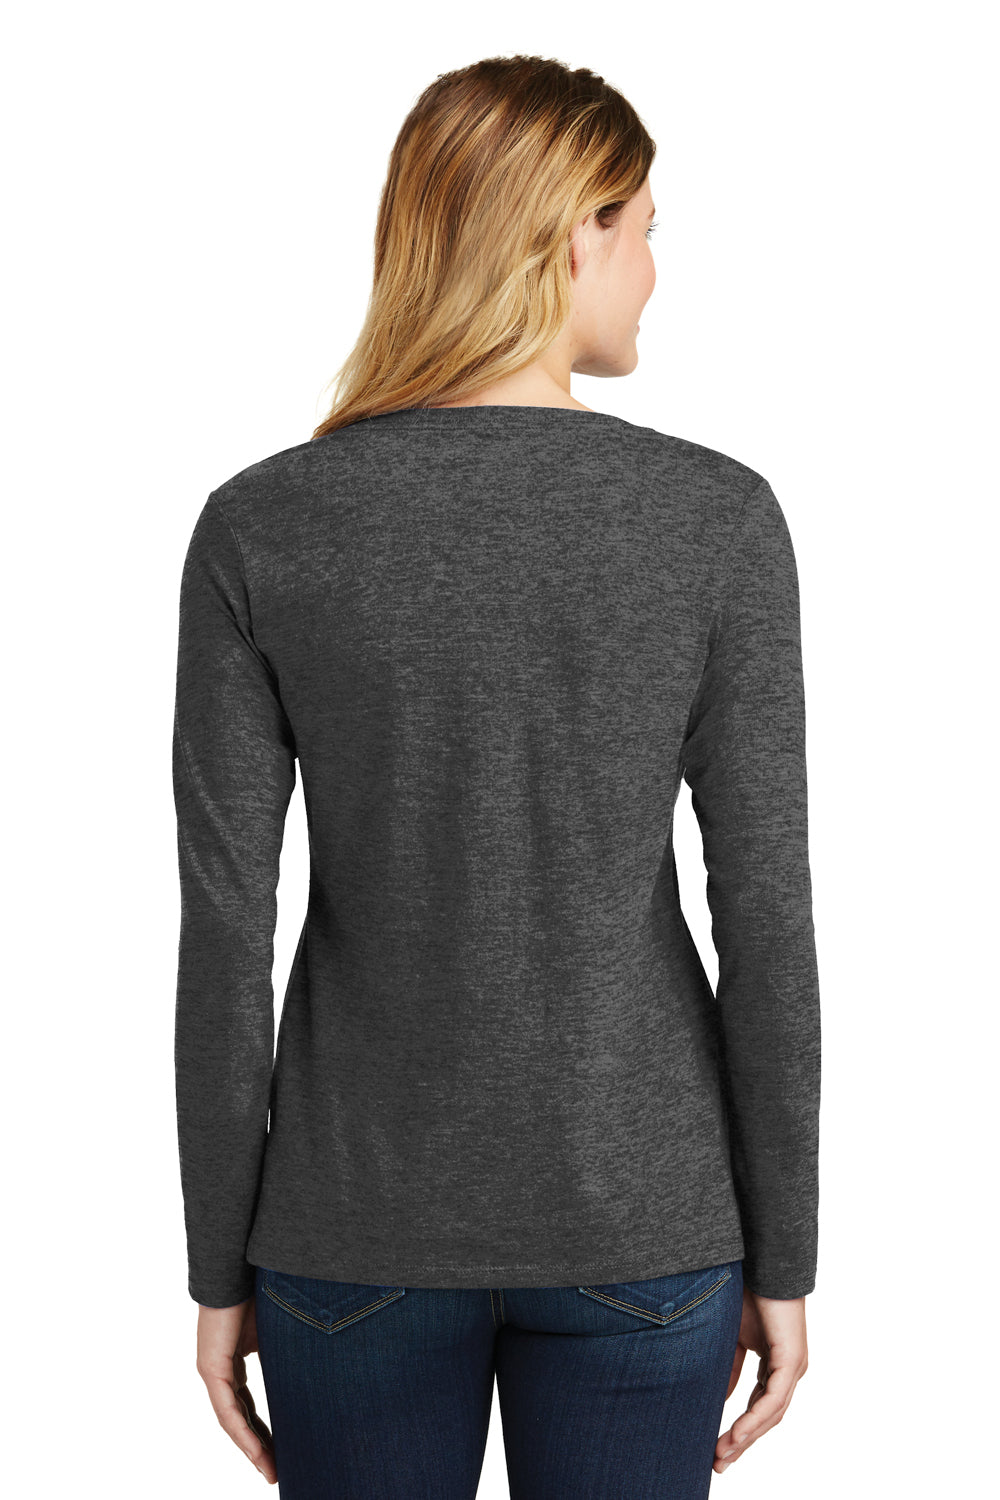 Port & Company LPC450VLS Womens Fan Favorite Long Sleeve V-Neck T-Shirt Heather Dark Grey Back